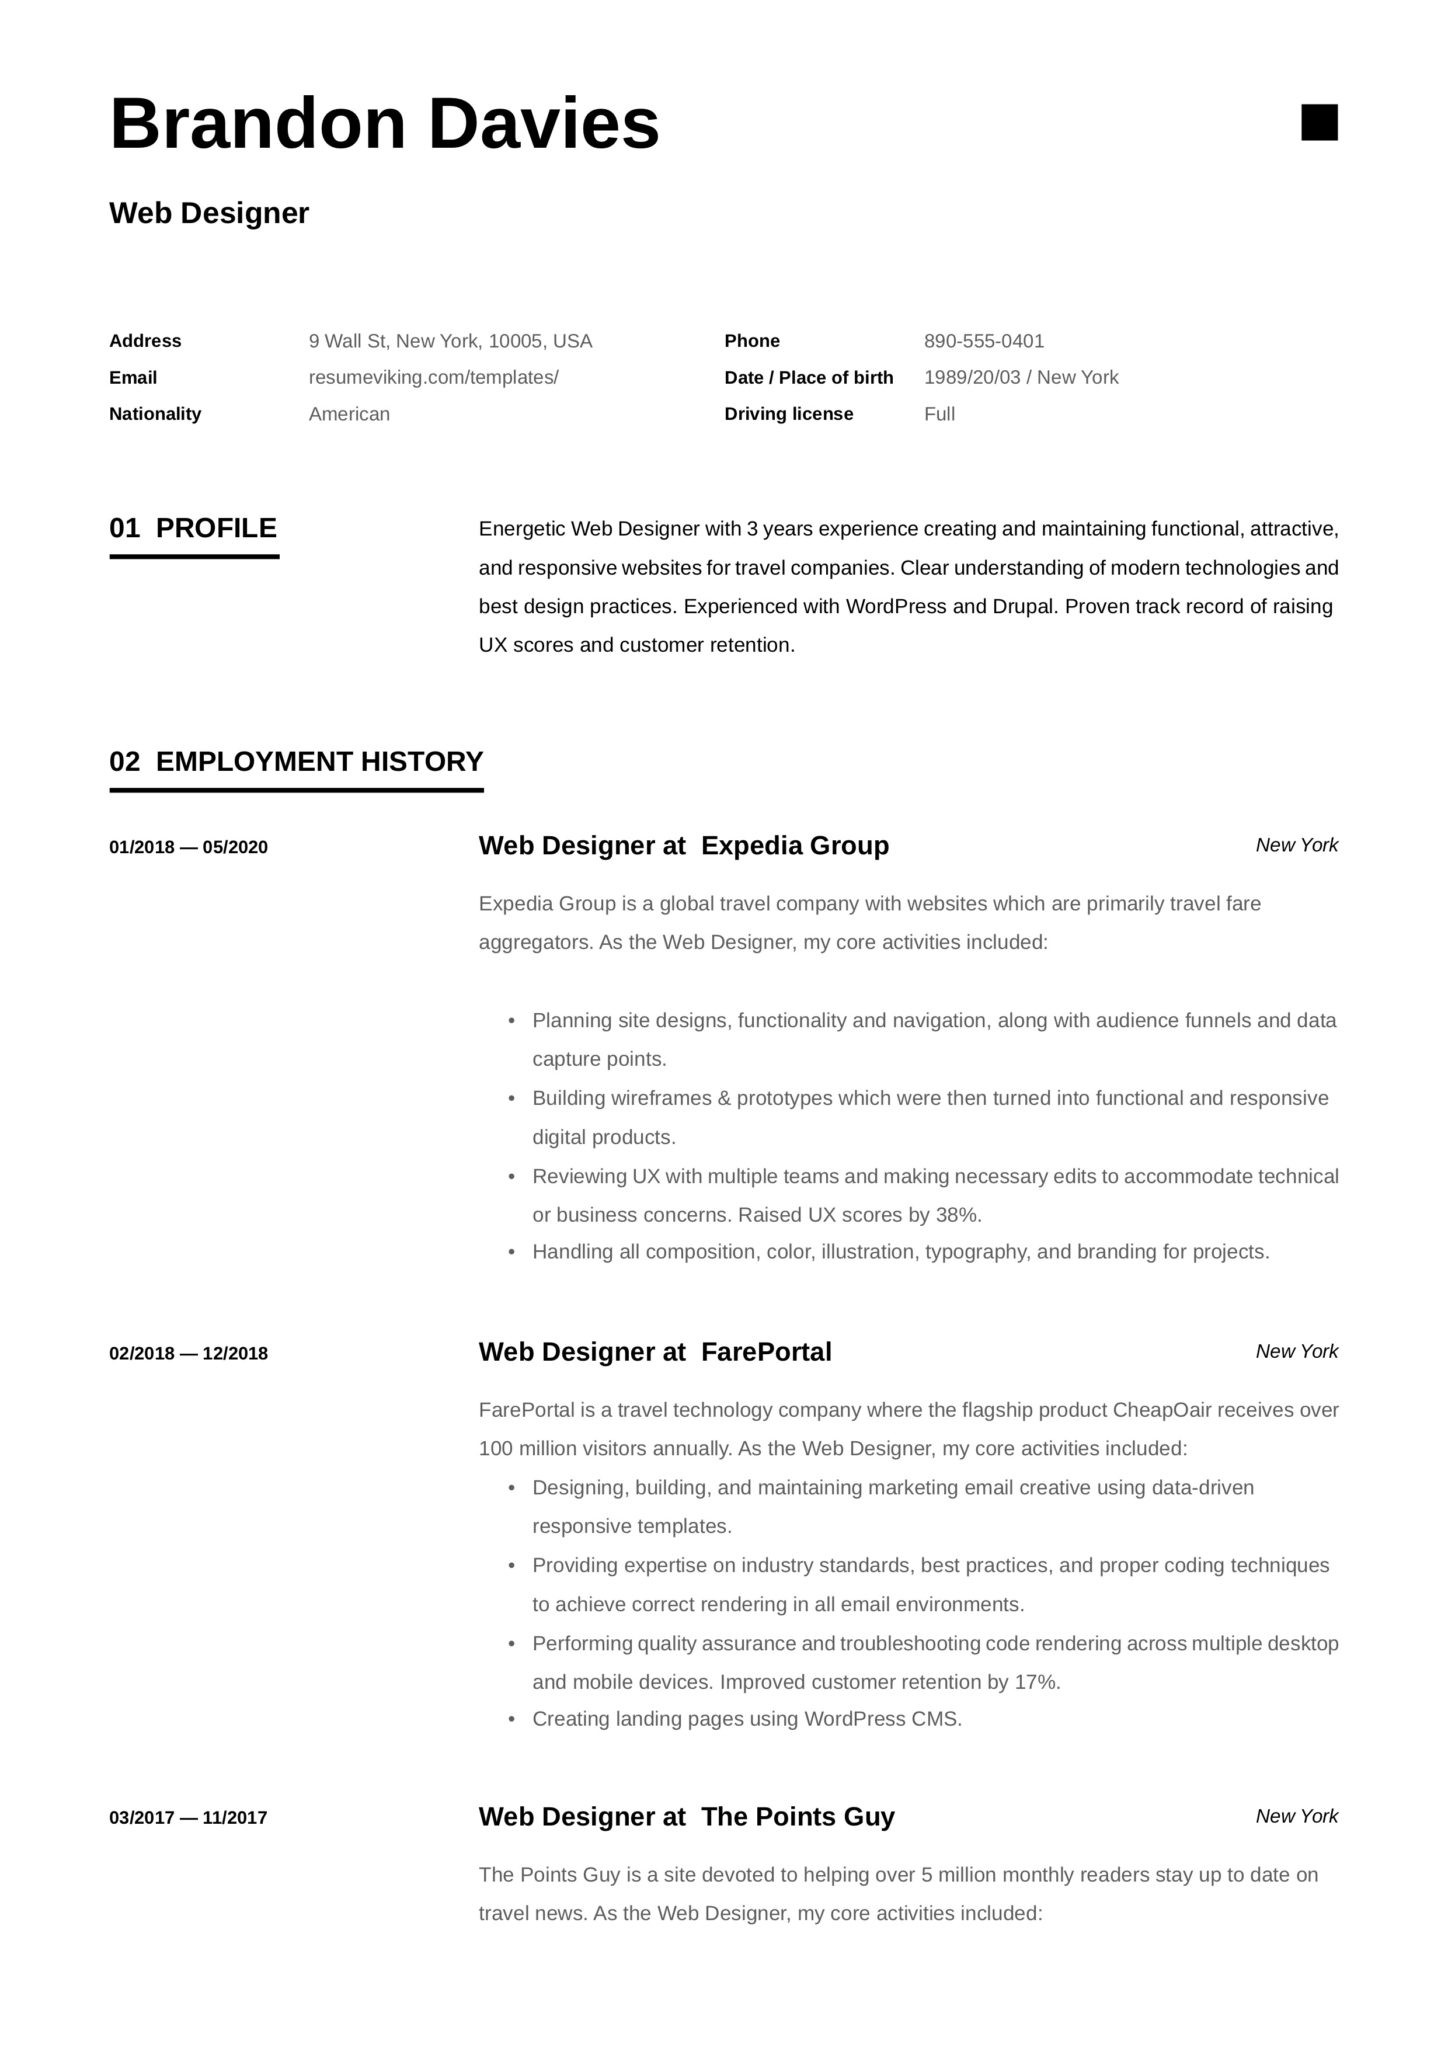 Web Designer Resume Sample In India 19 Free Web Designer Resume Examples & Guide Pdf 2020